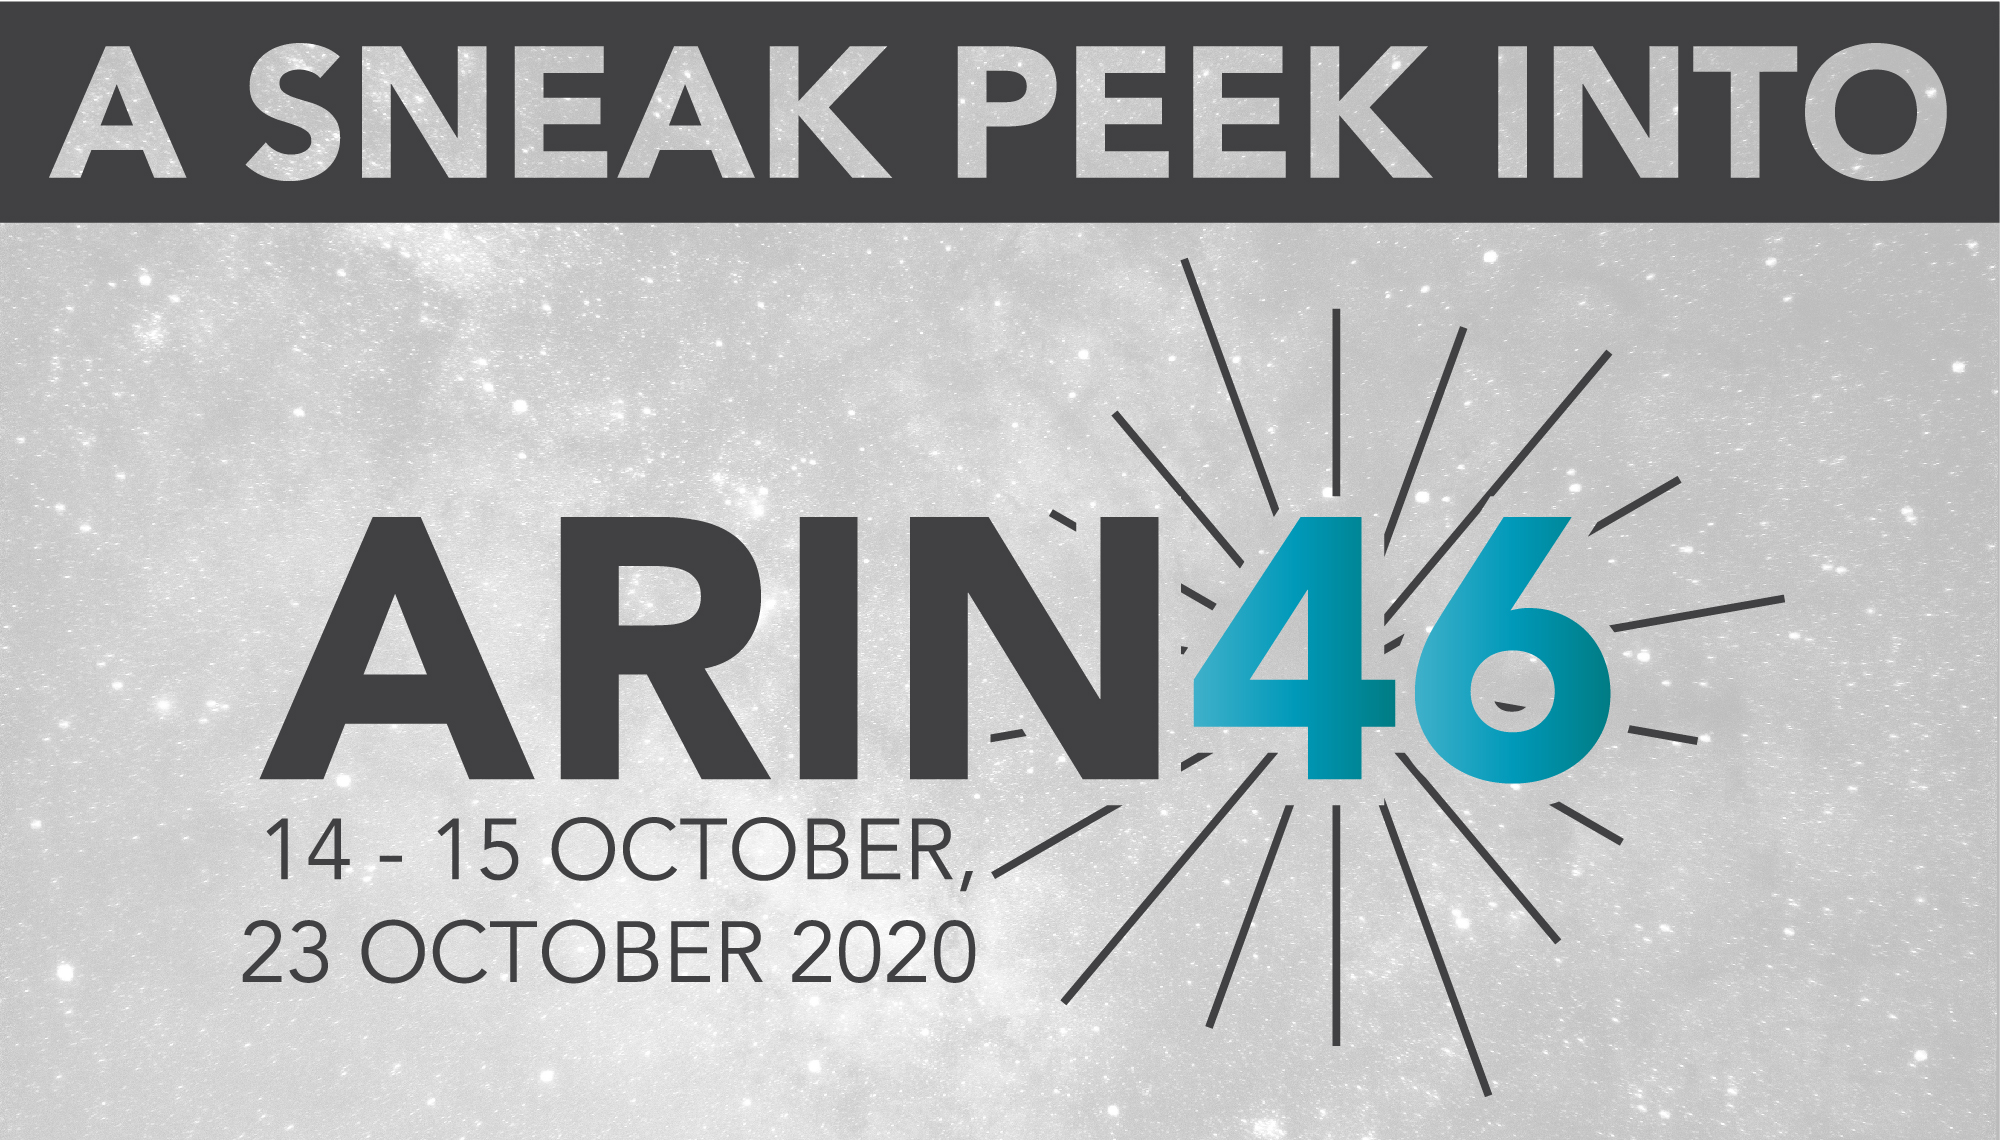 A Sneak Peek into ARIN 46